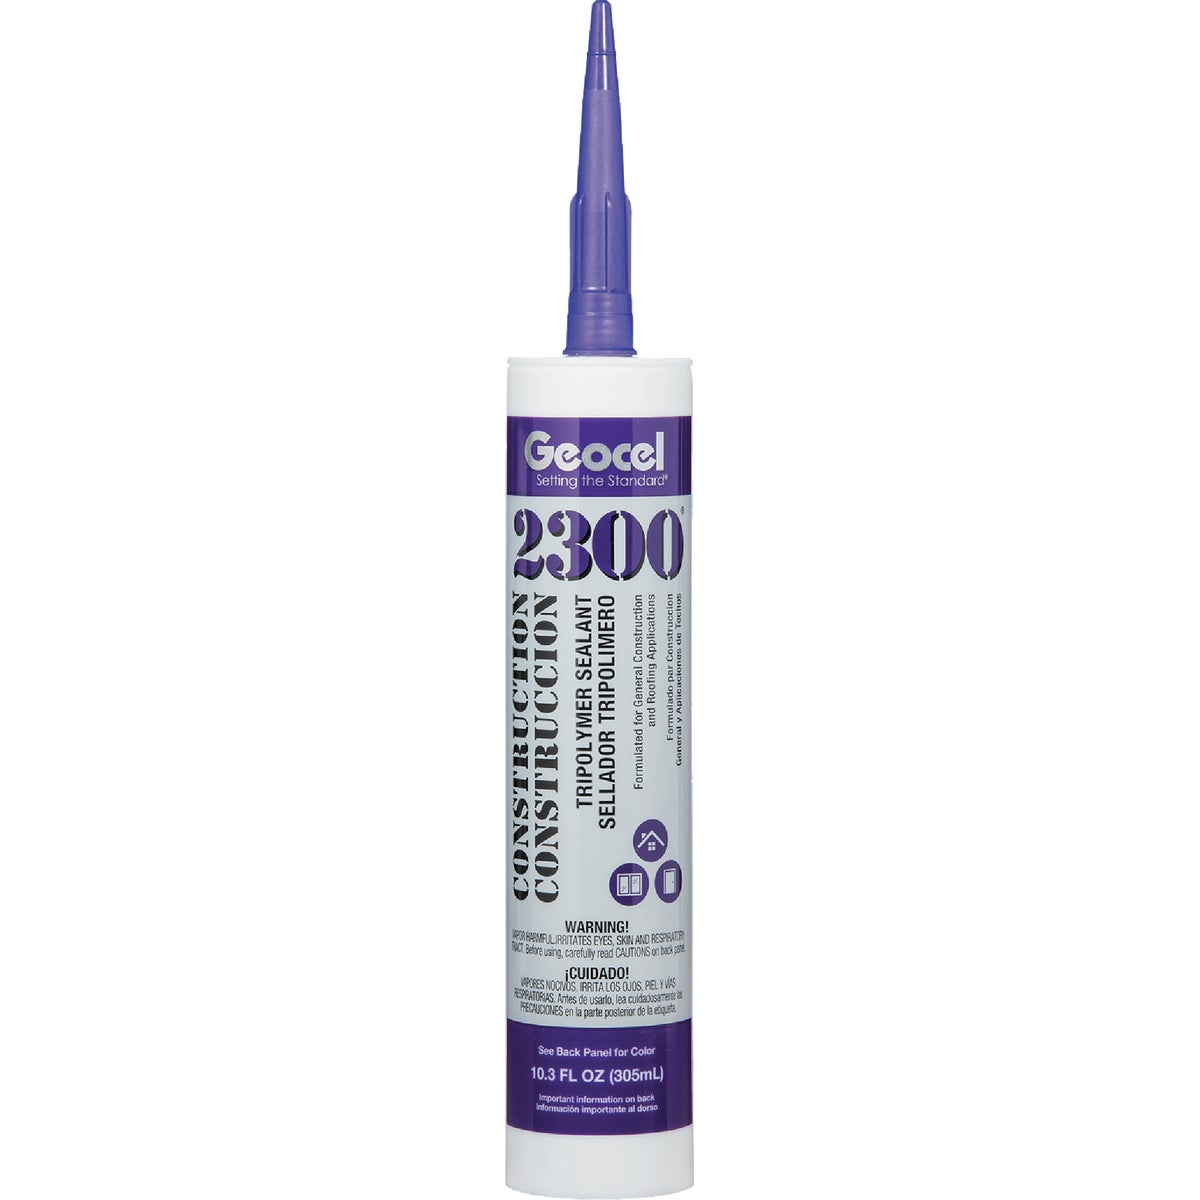 Geocel 2300 10.3 Oz. Cedar Construction Tripolymer Sealant (Plastic Cartridge)